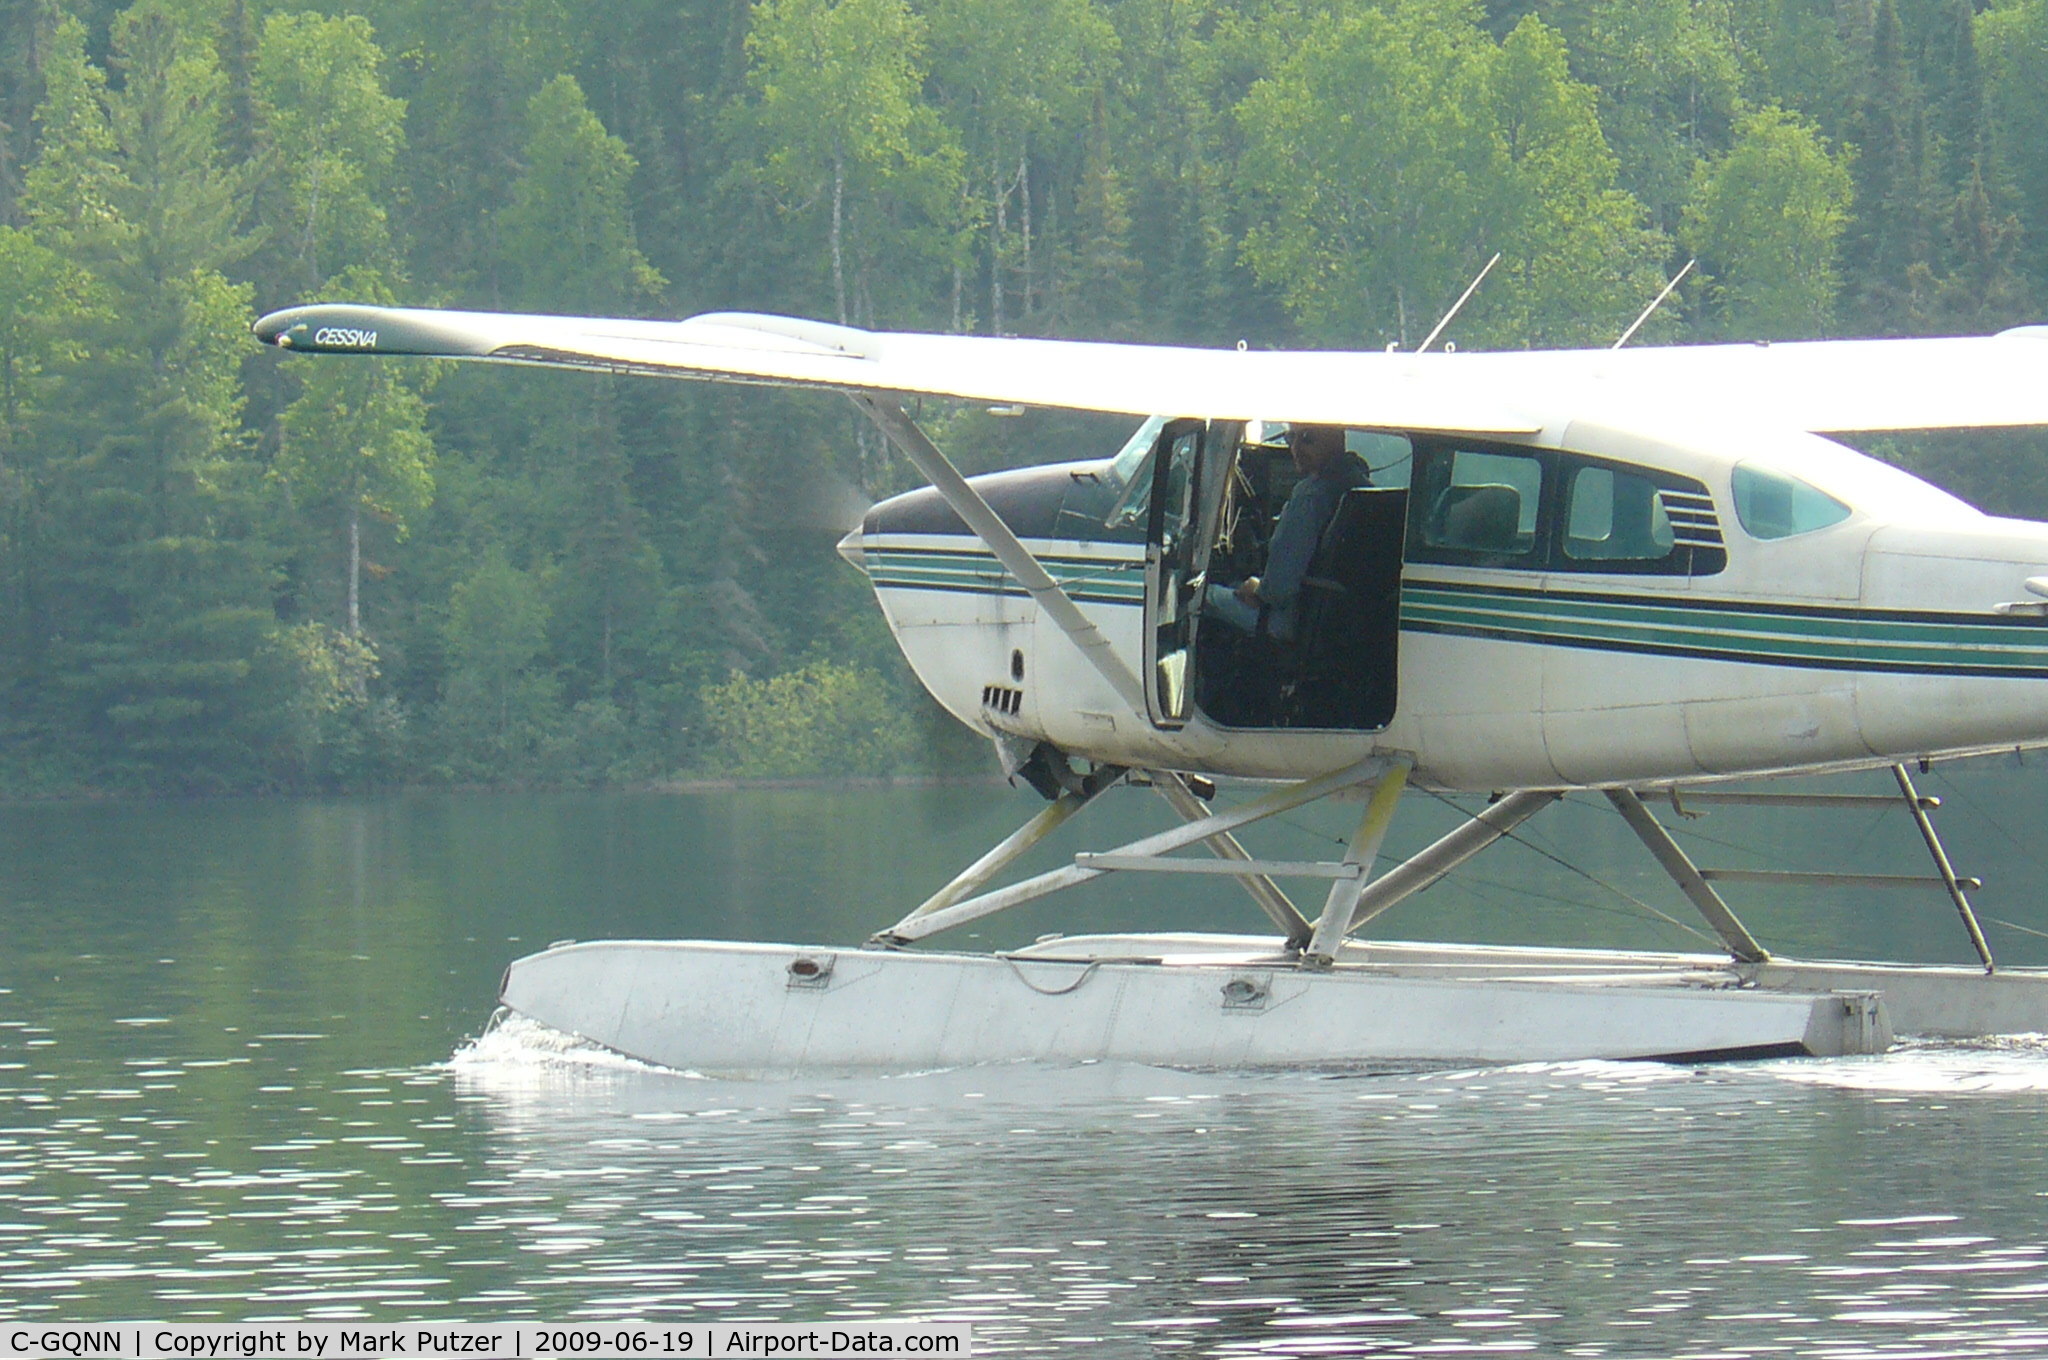 C-GQNN, 1977 Cessna 180K Skywagon C/N 18052866, C-GQNN on Mosher Lake June 20th 2009